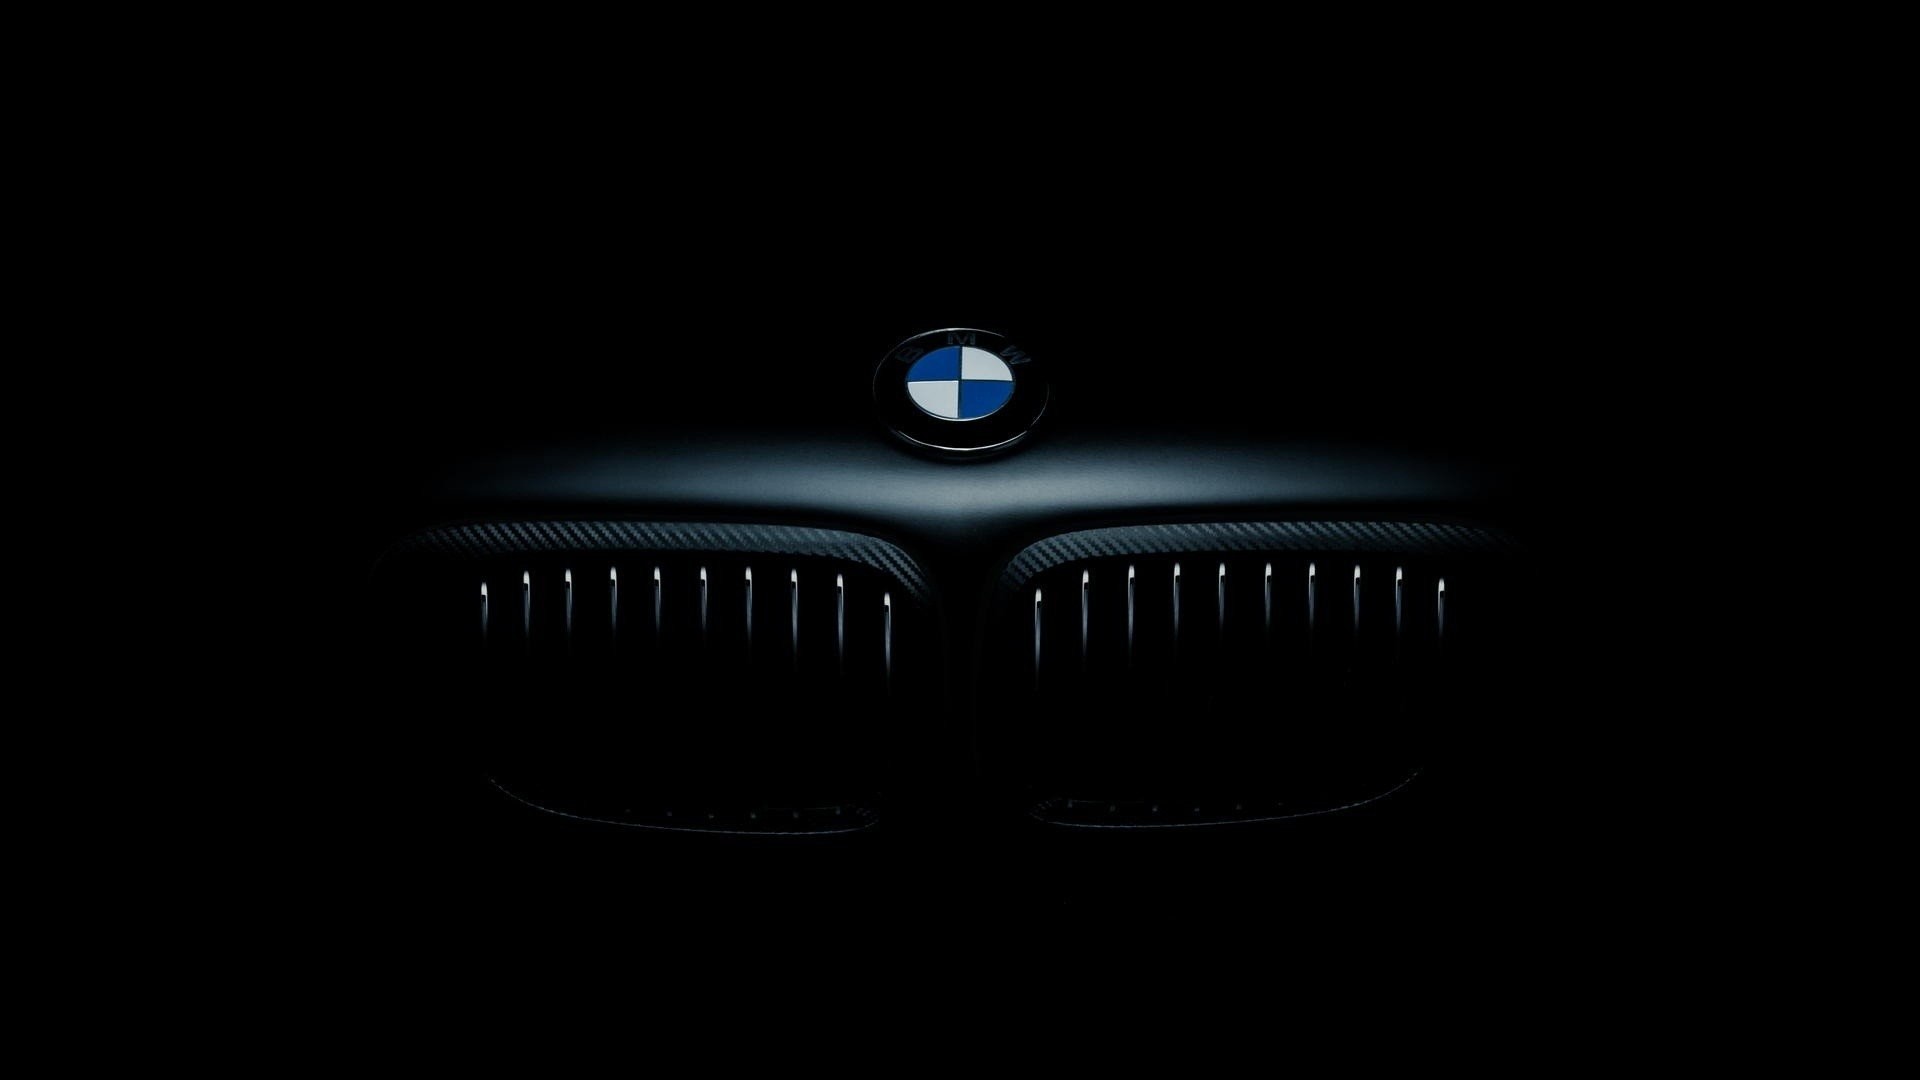 1920x1080 BMW Logo HD Images | Download Free Desktop Wallpaper Images & Pictures